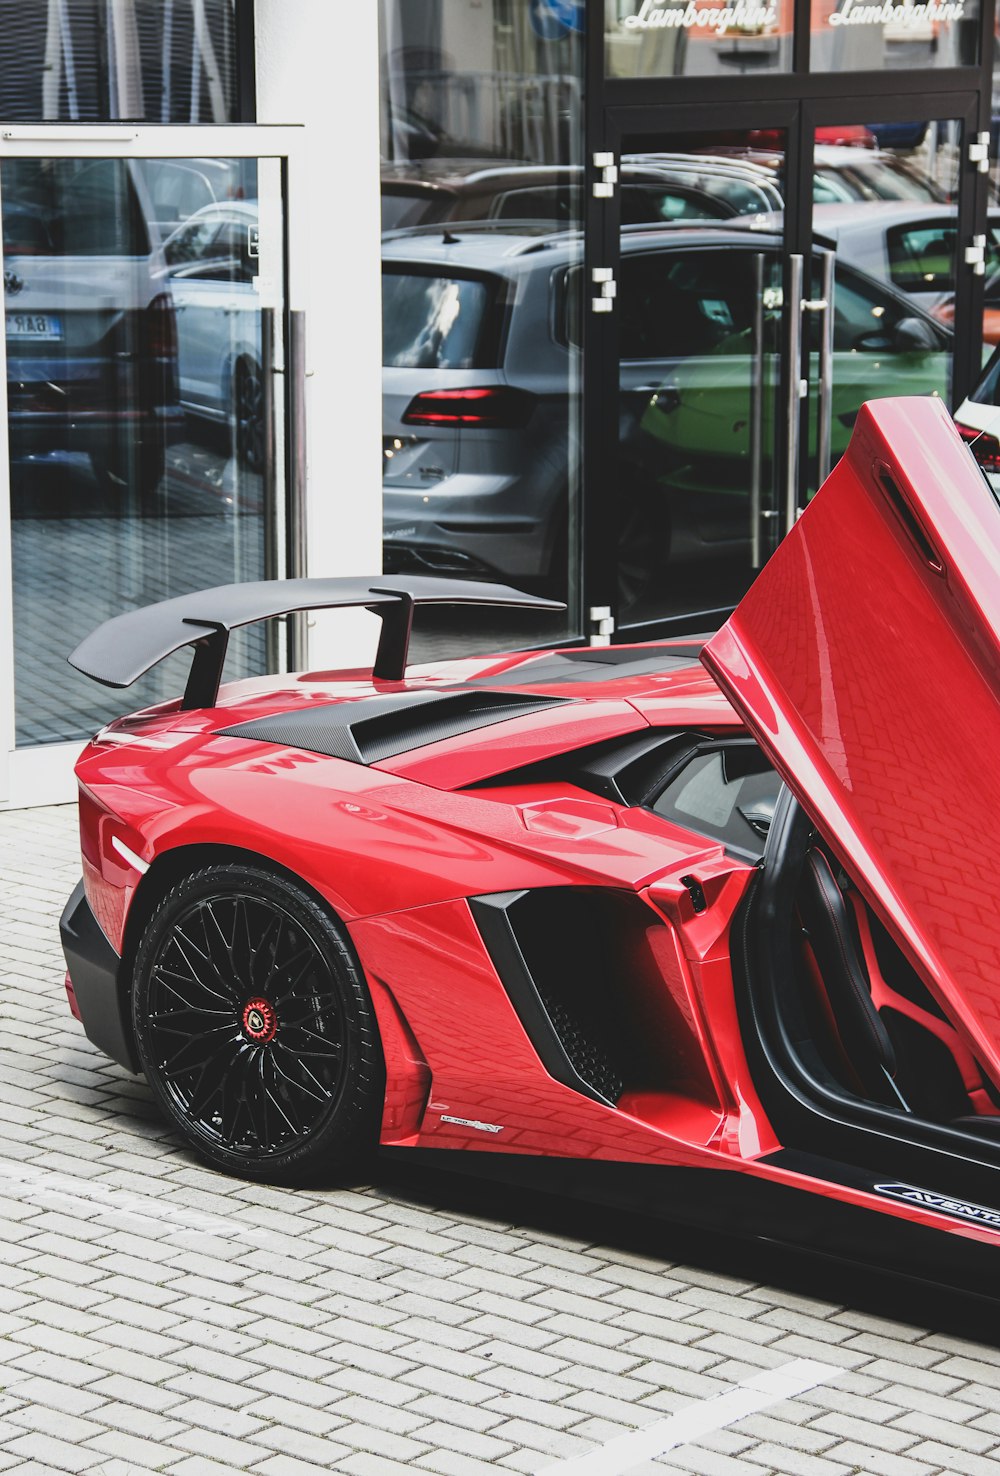 100+ Lamborghini Aventador Sv Pictures | Download Free ...